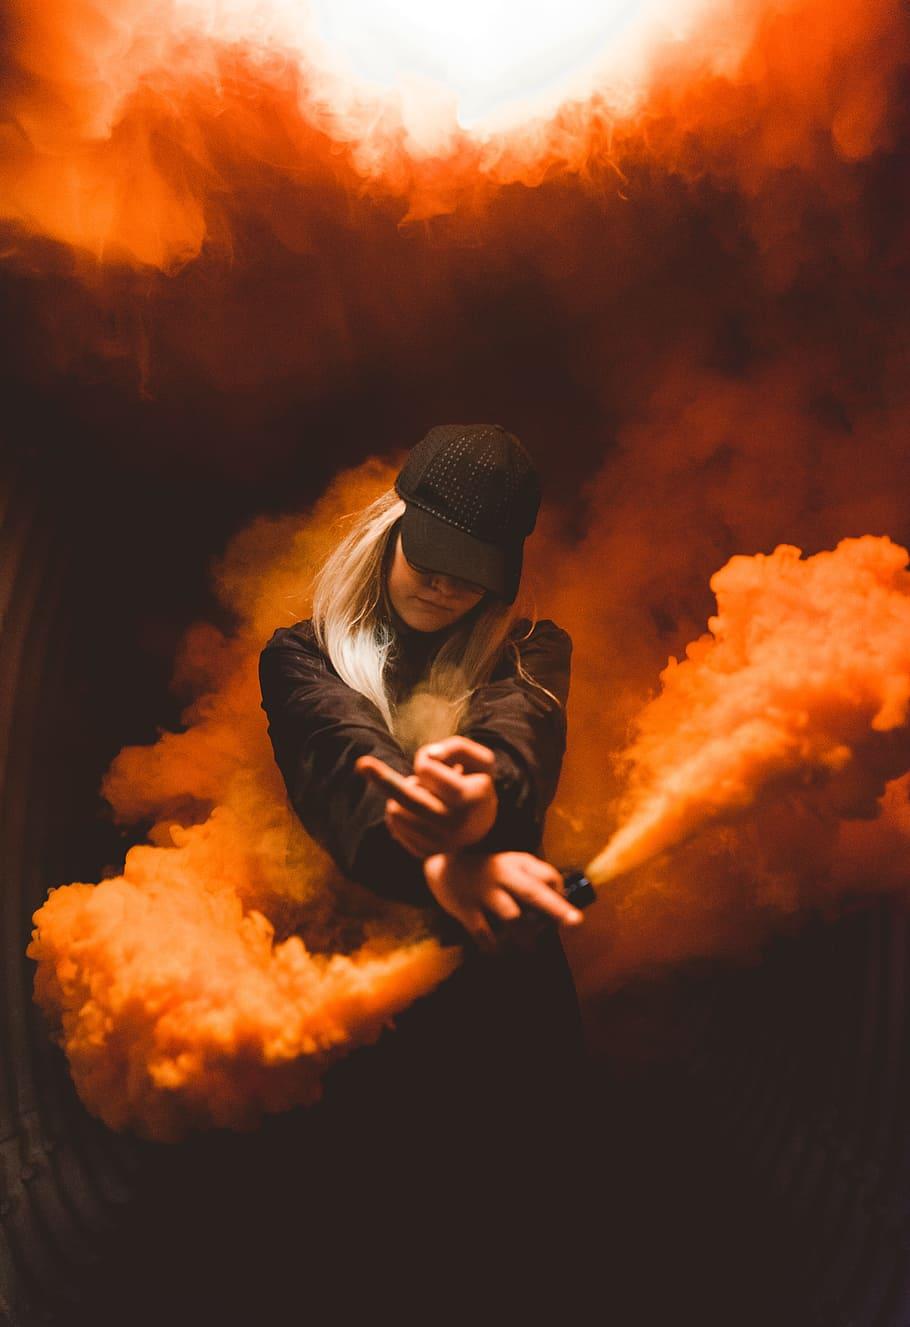 HD wallpaper: smoke bomb, middle finger, person, hat, orange, girl, dark